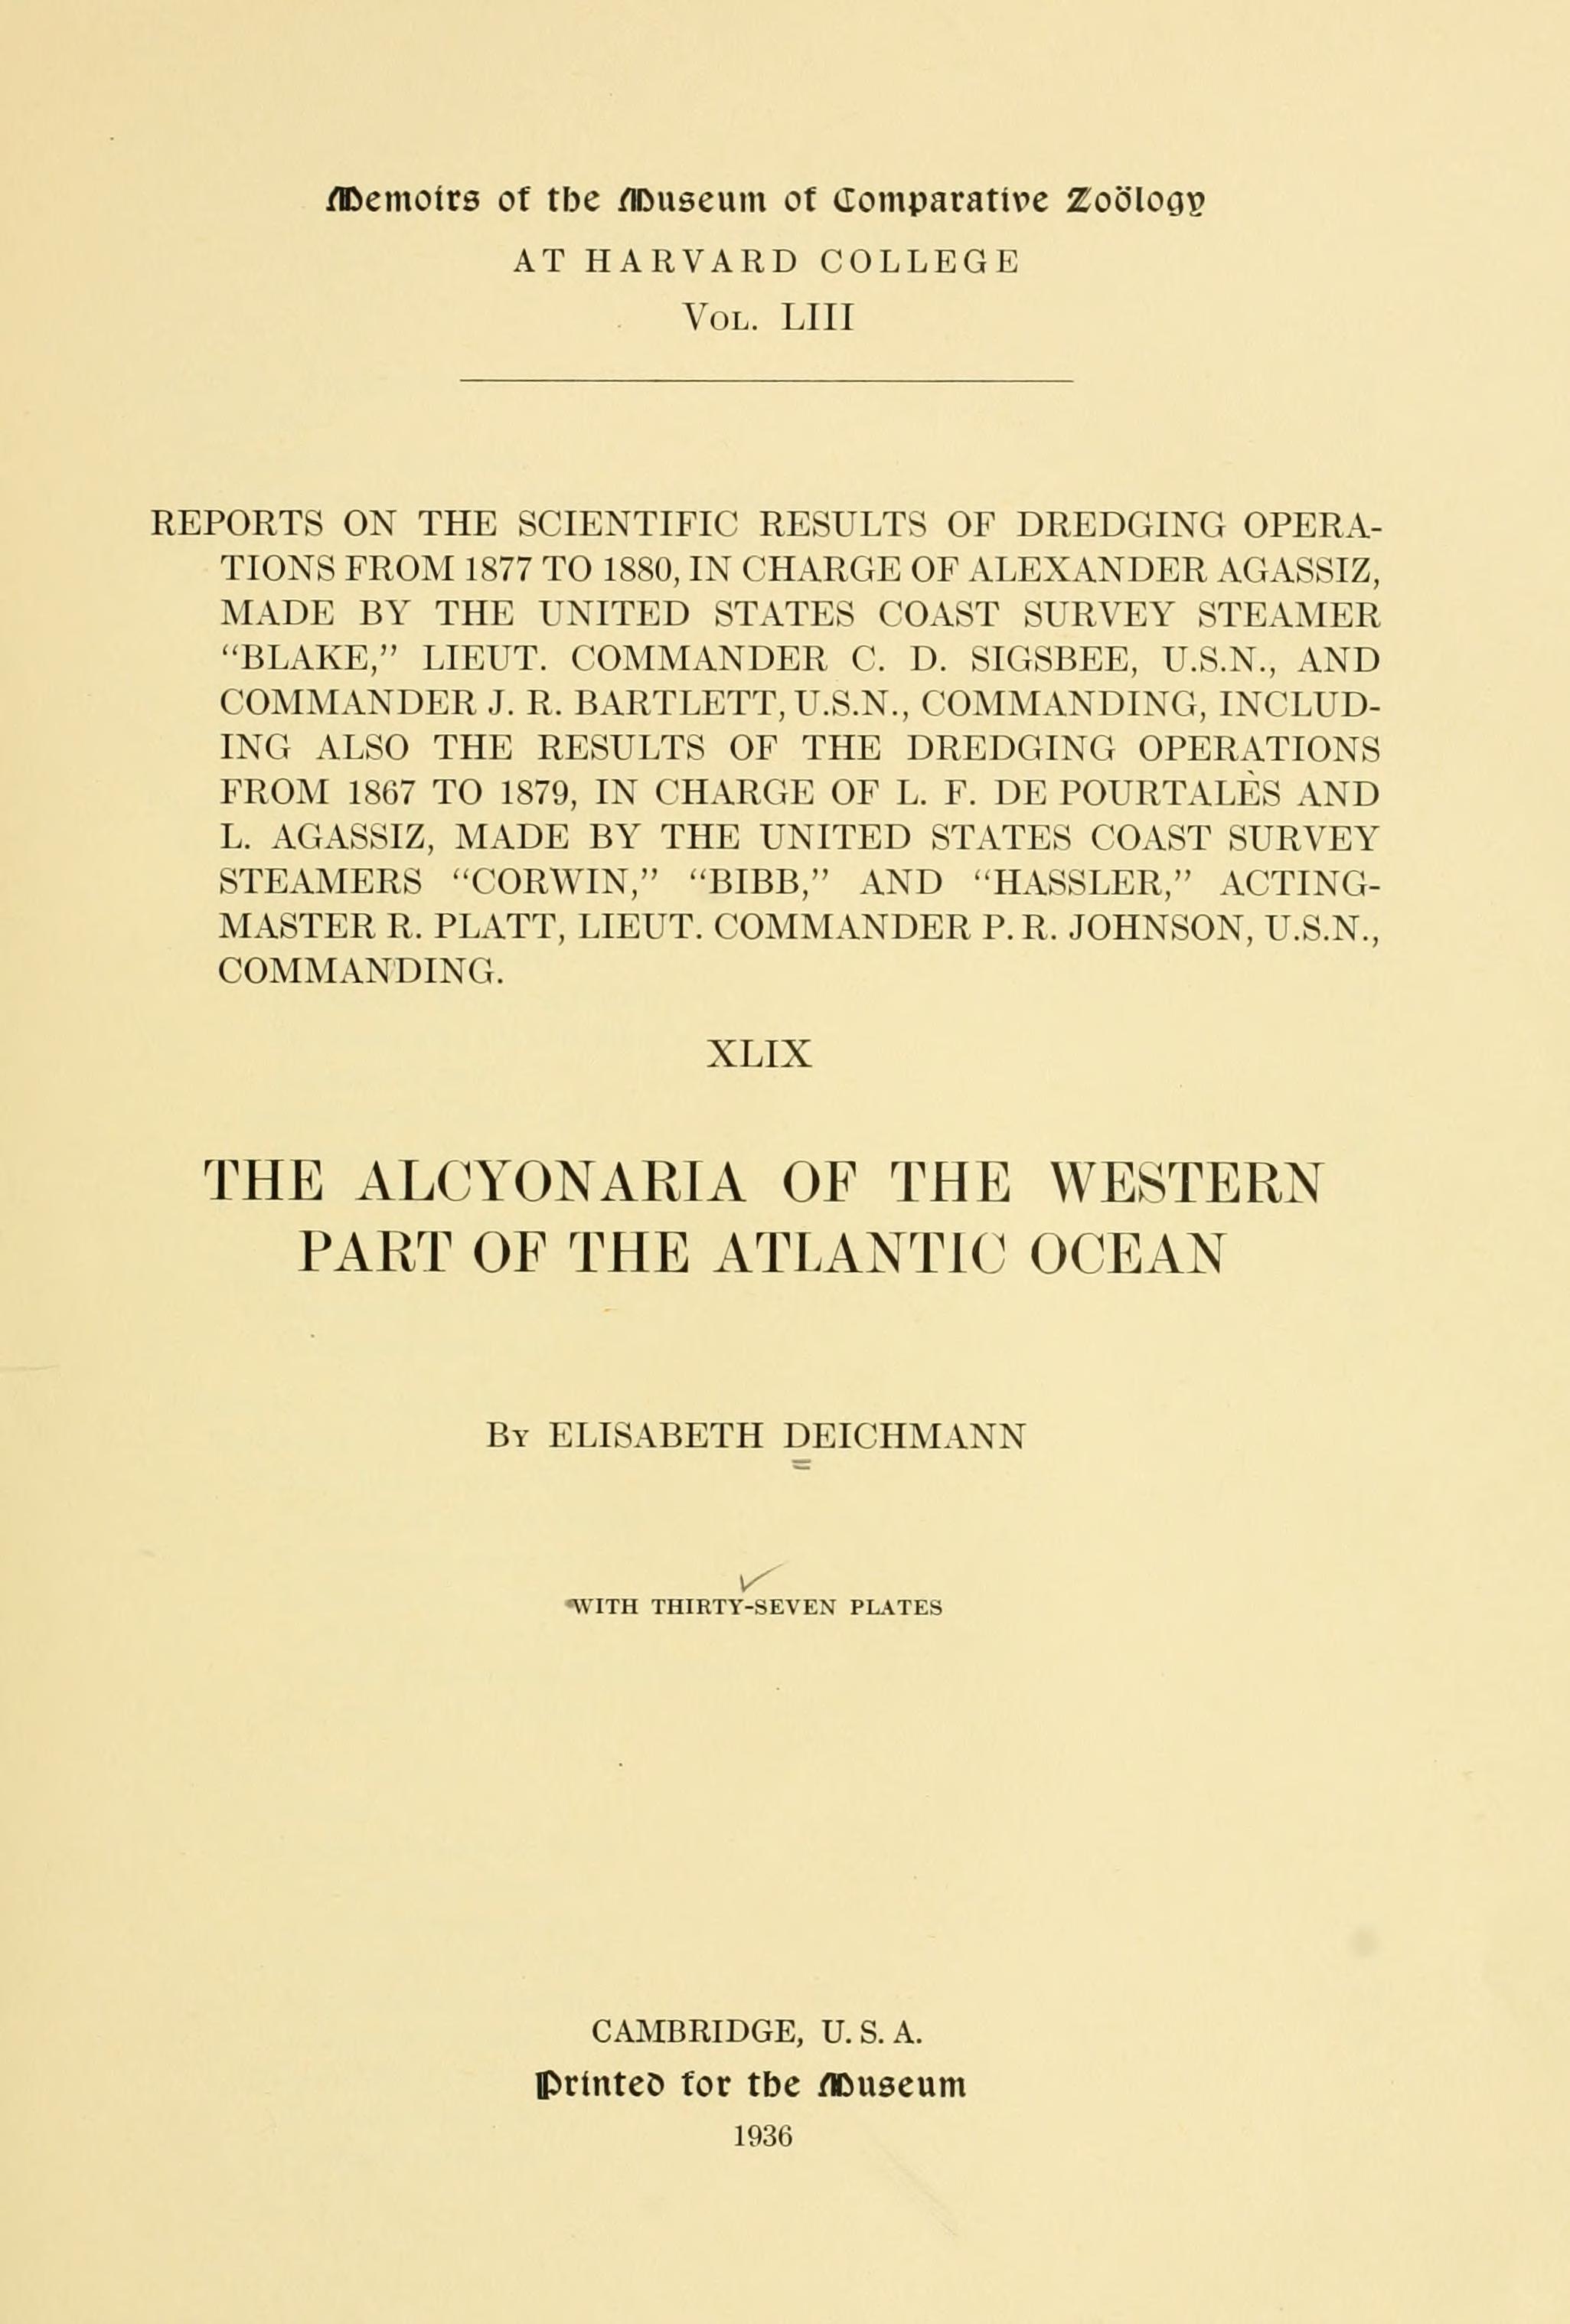 Media type: text, Deichmann 1936 Description: MCZ Memoirs Vol. LIII